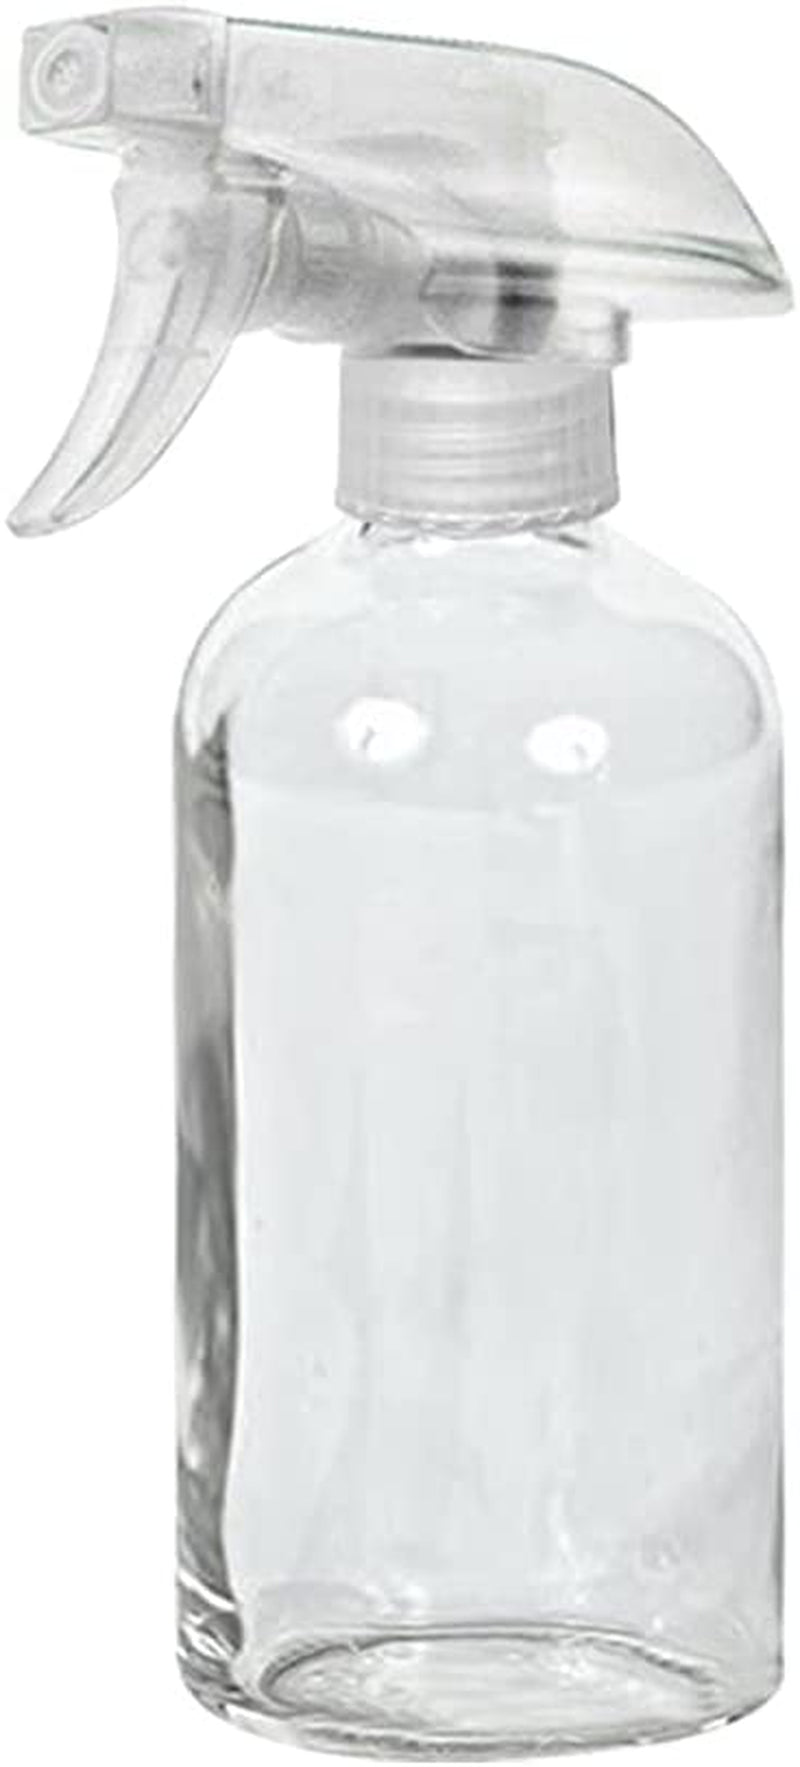 4X 500Ml Clear Glass Spray Bottles Trigger Water Sprayer Aromatherapy Dispenser Clear&4 PCS